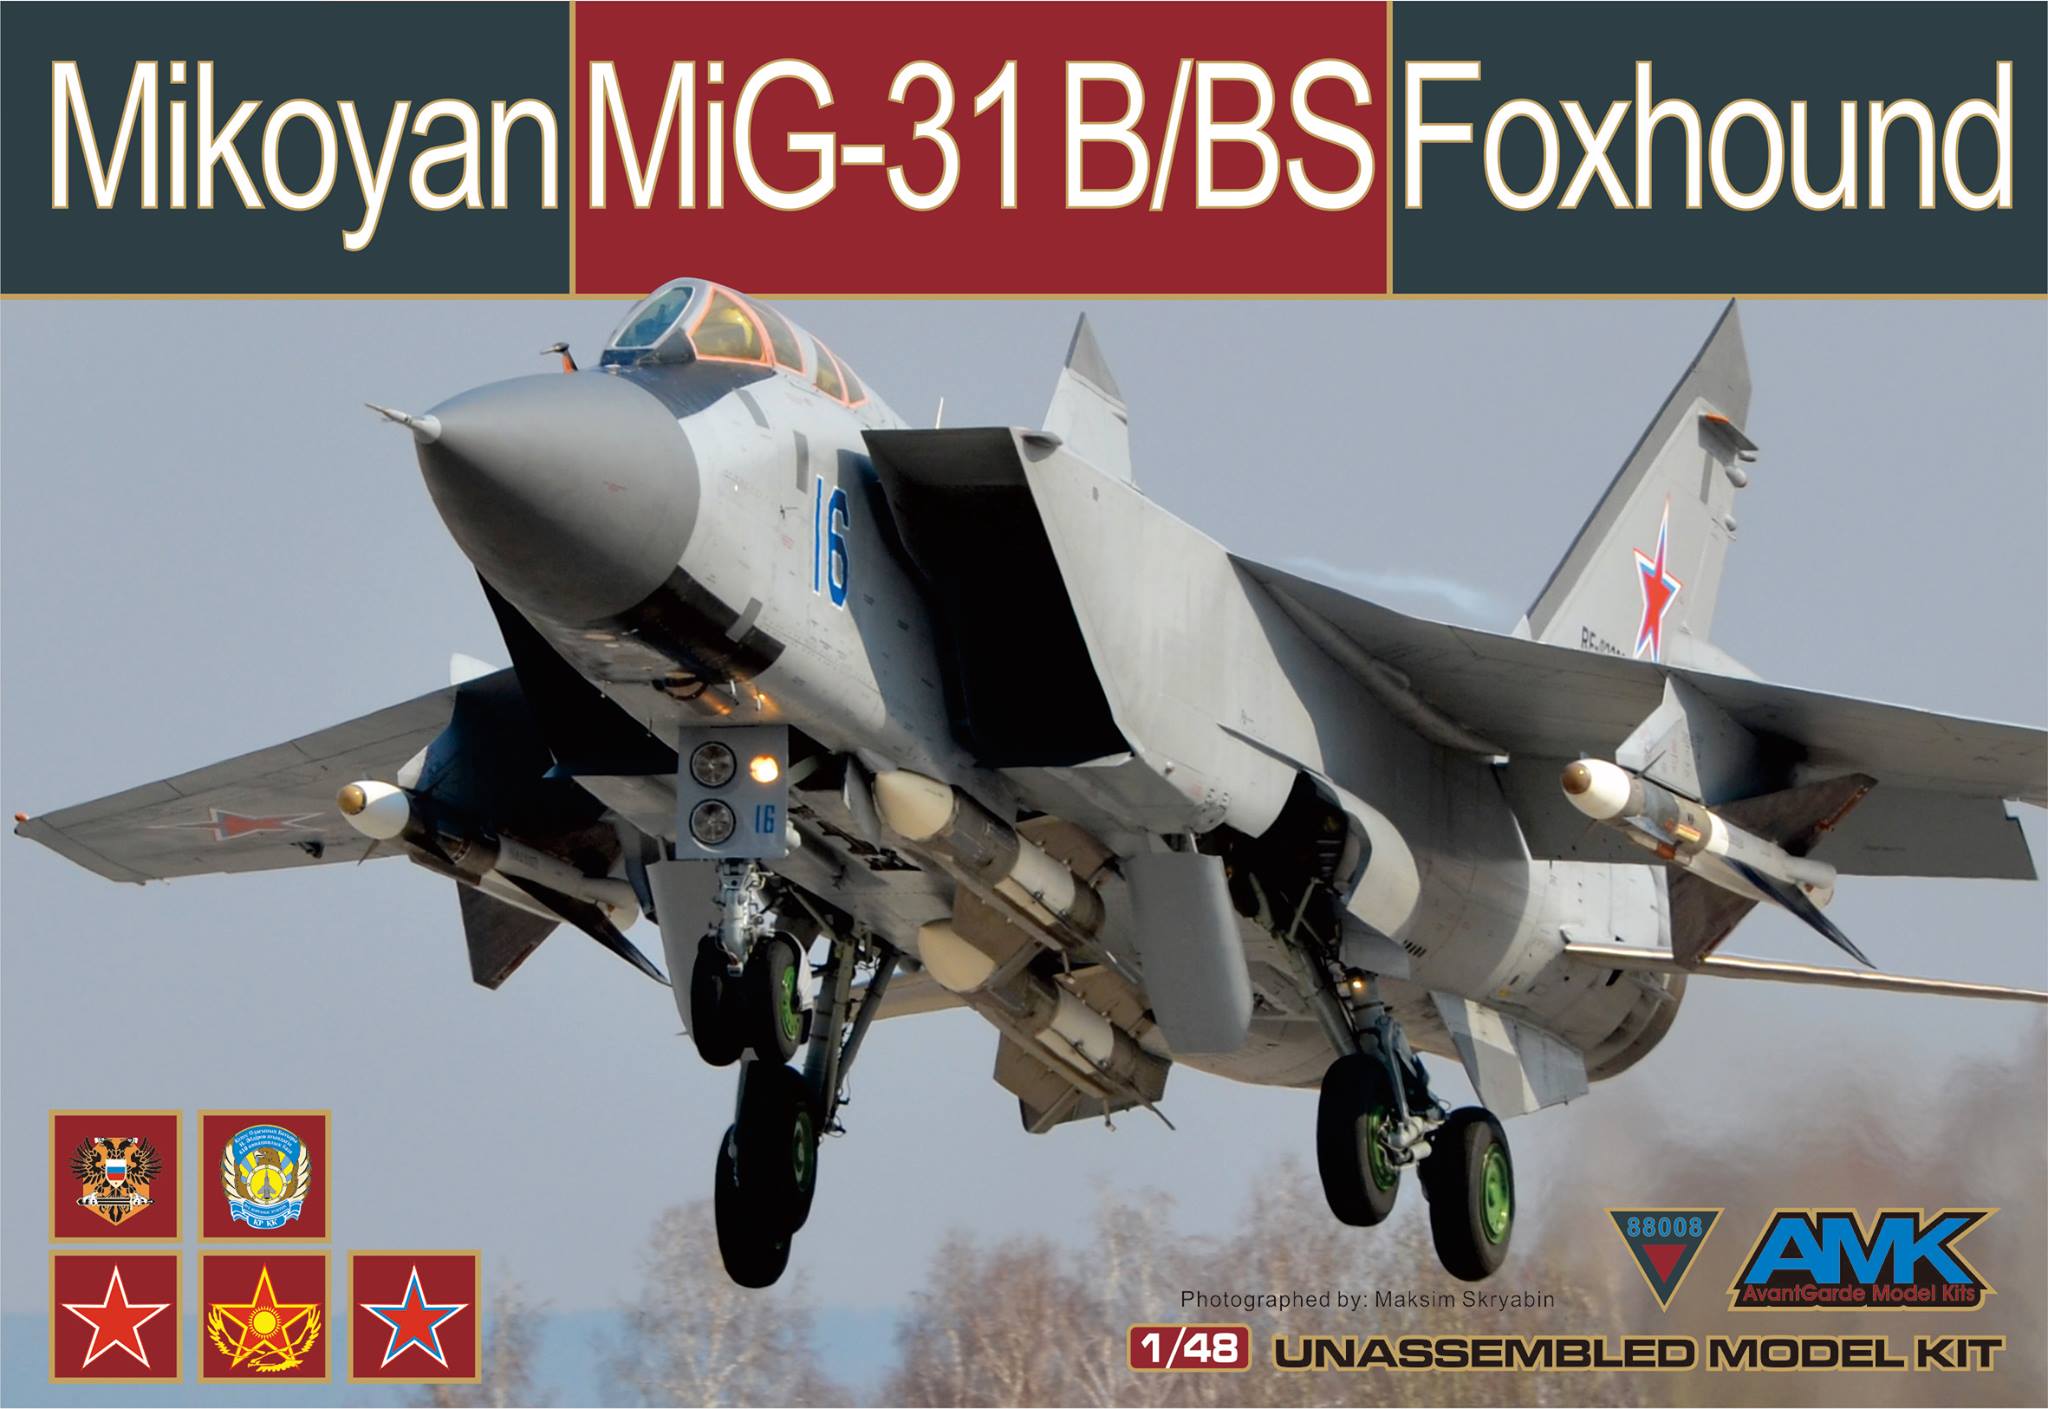 MiG-31 B/BS Foxhound